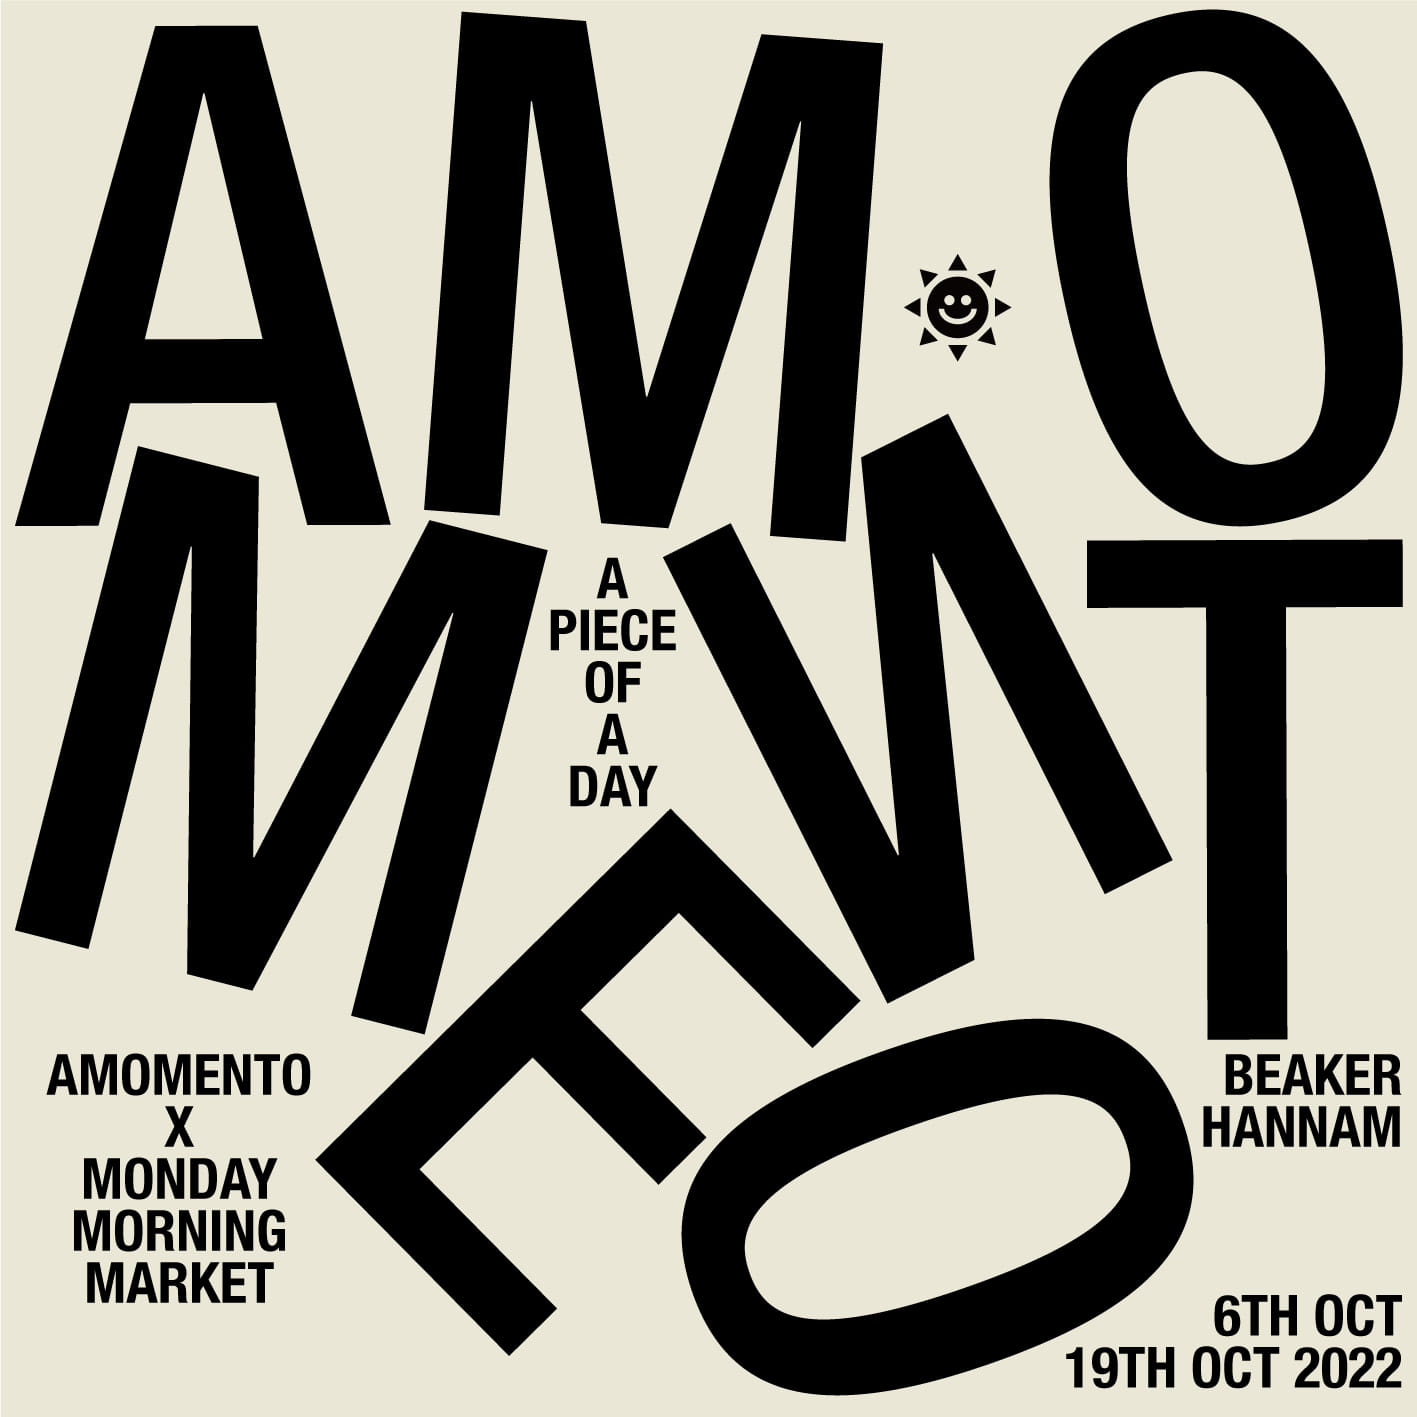 Monday Amomento Market